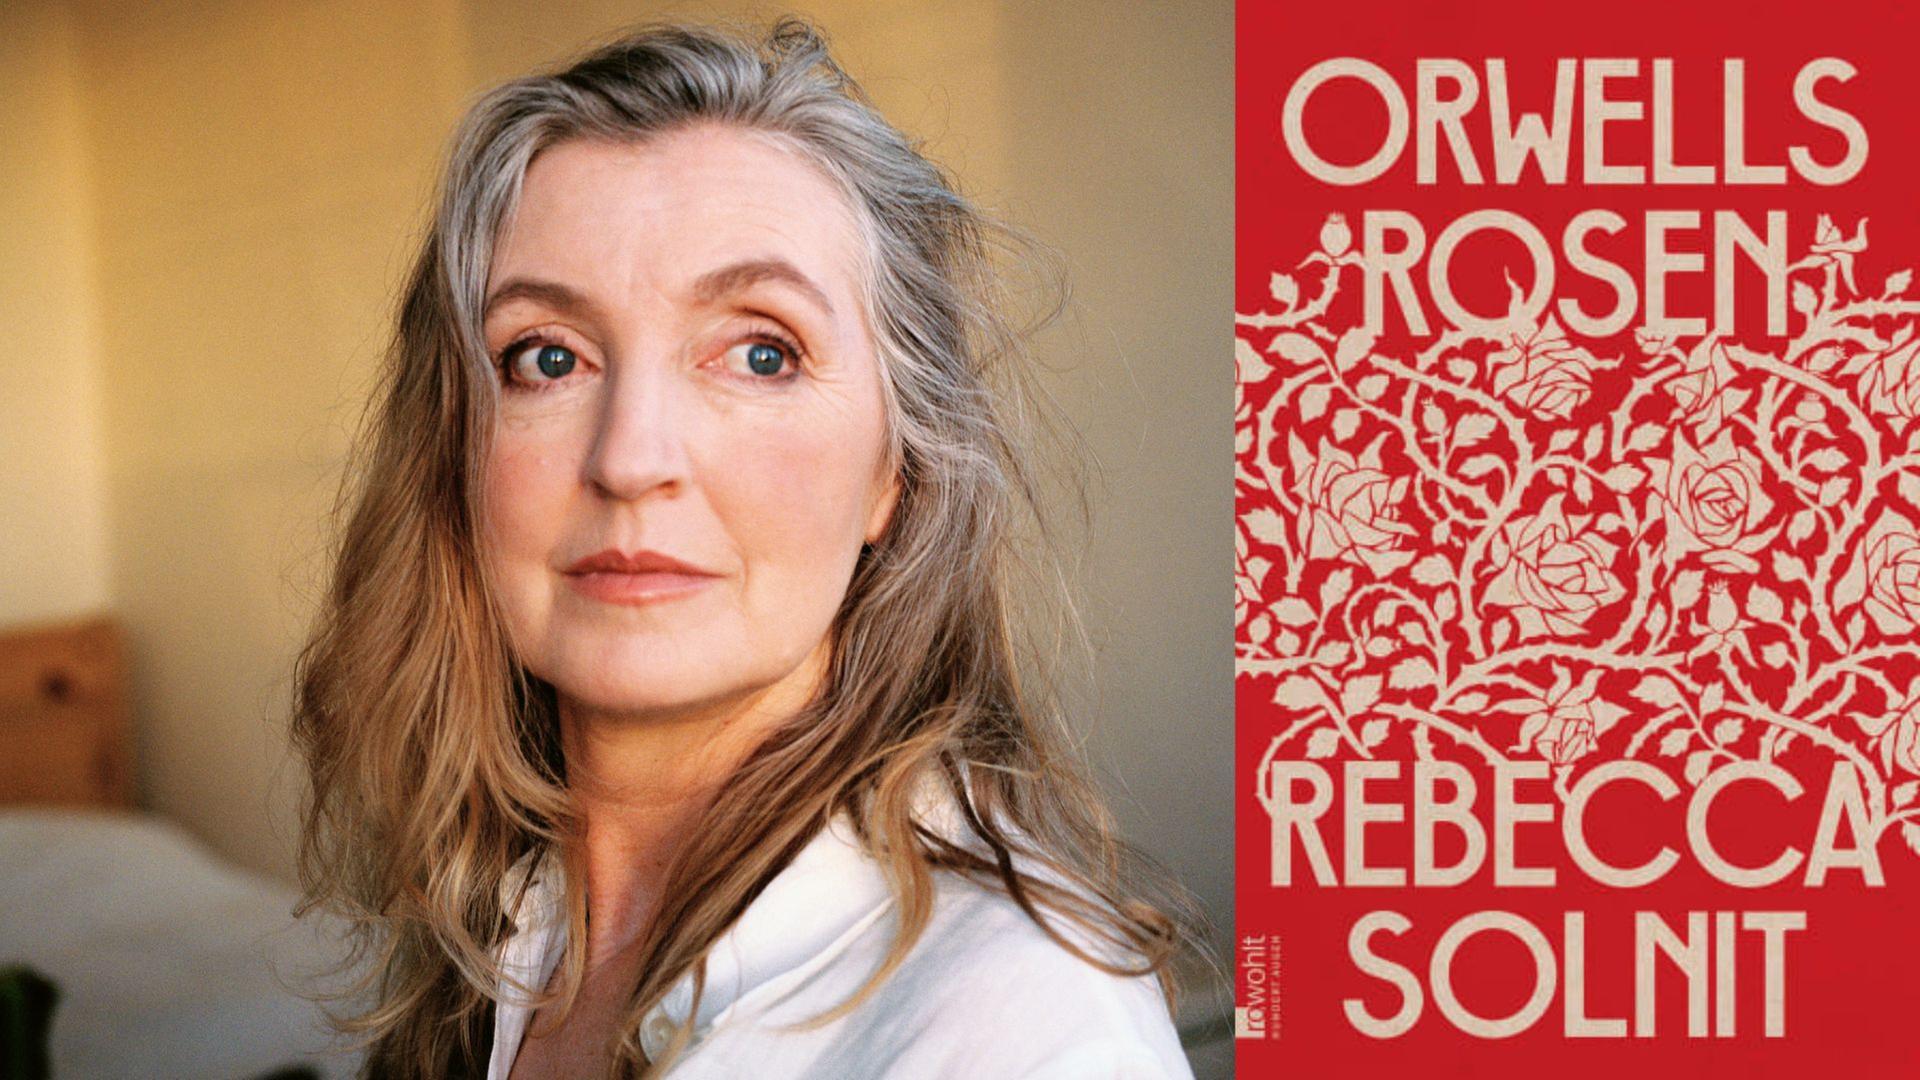 Rebecca Solnit: "Orwells Rosen"